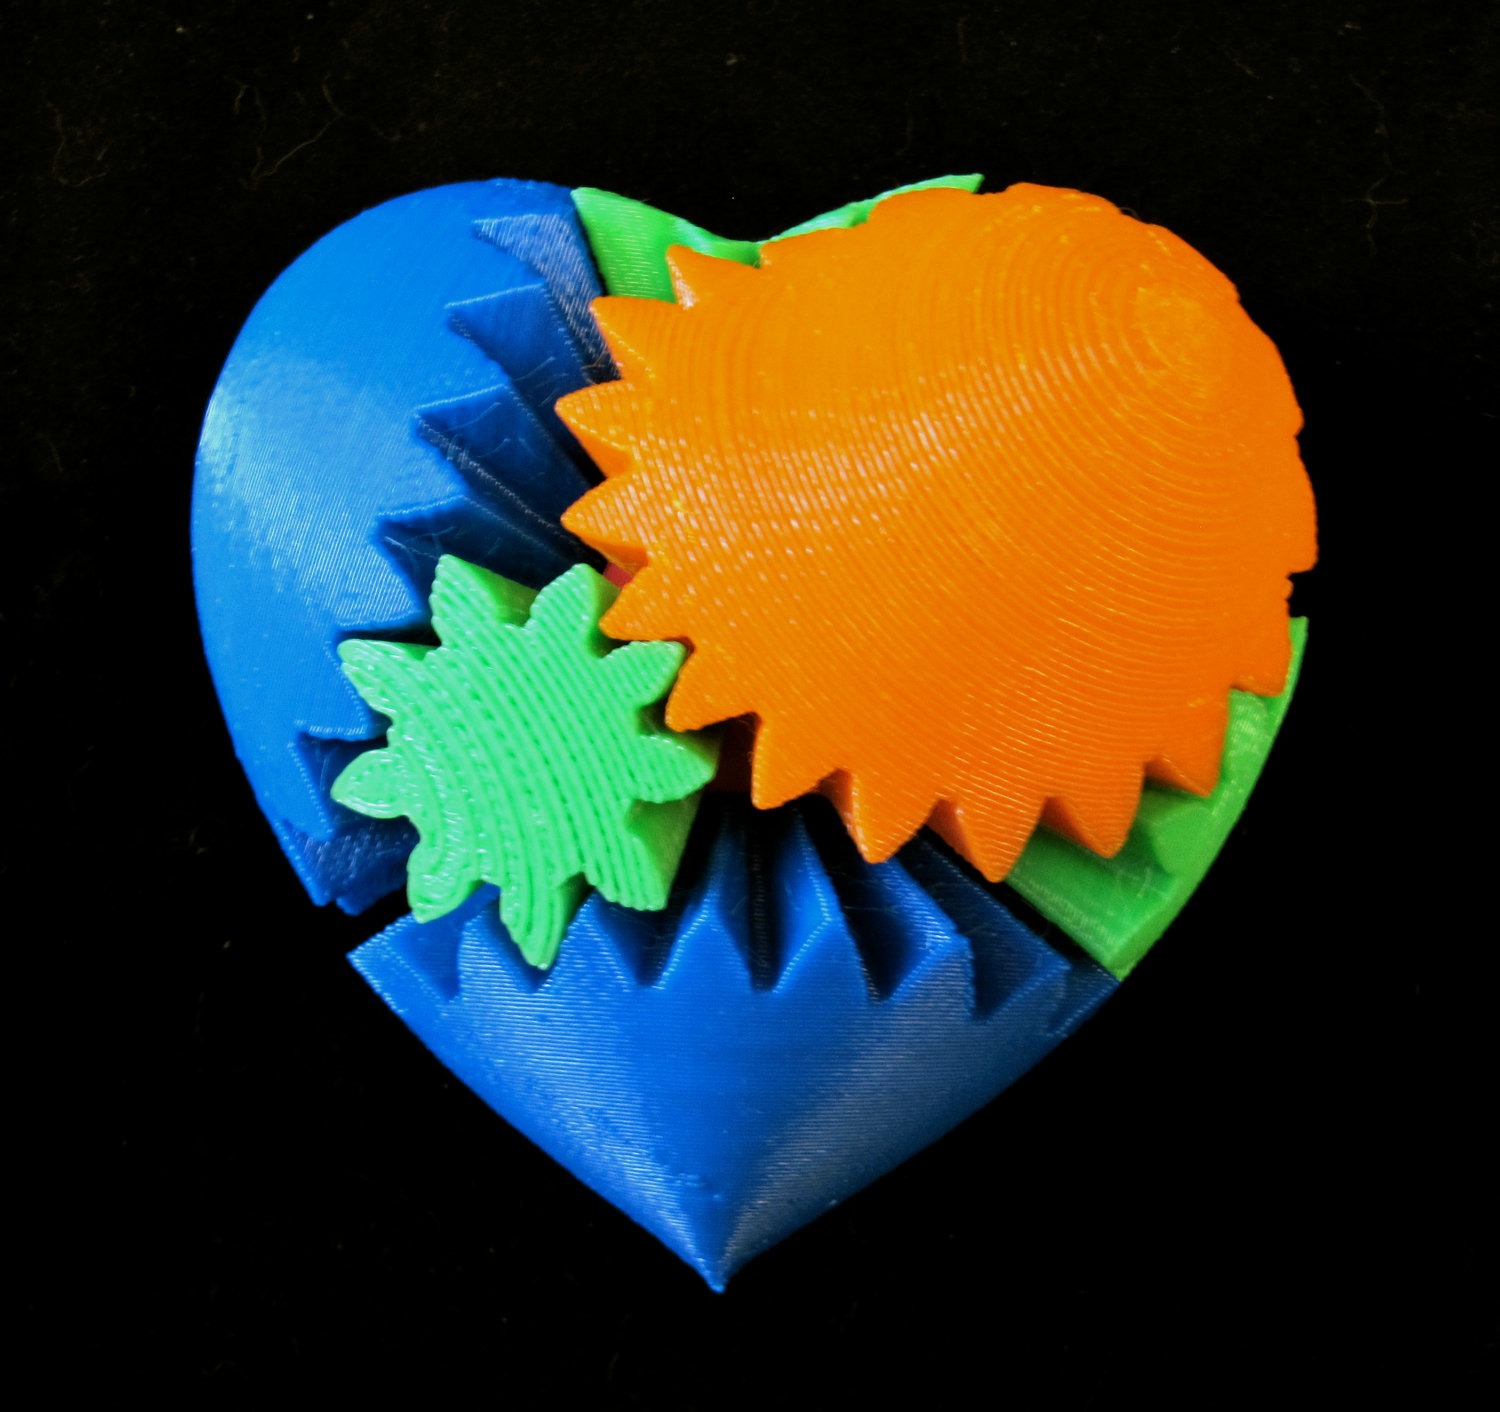 Geek Love 3D Printed Mechanical Gear Heart Toy steampunk buy now online